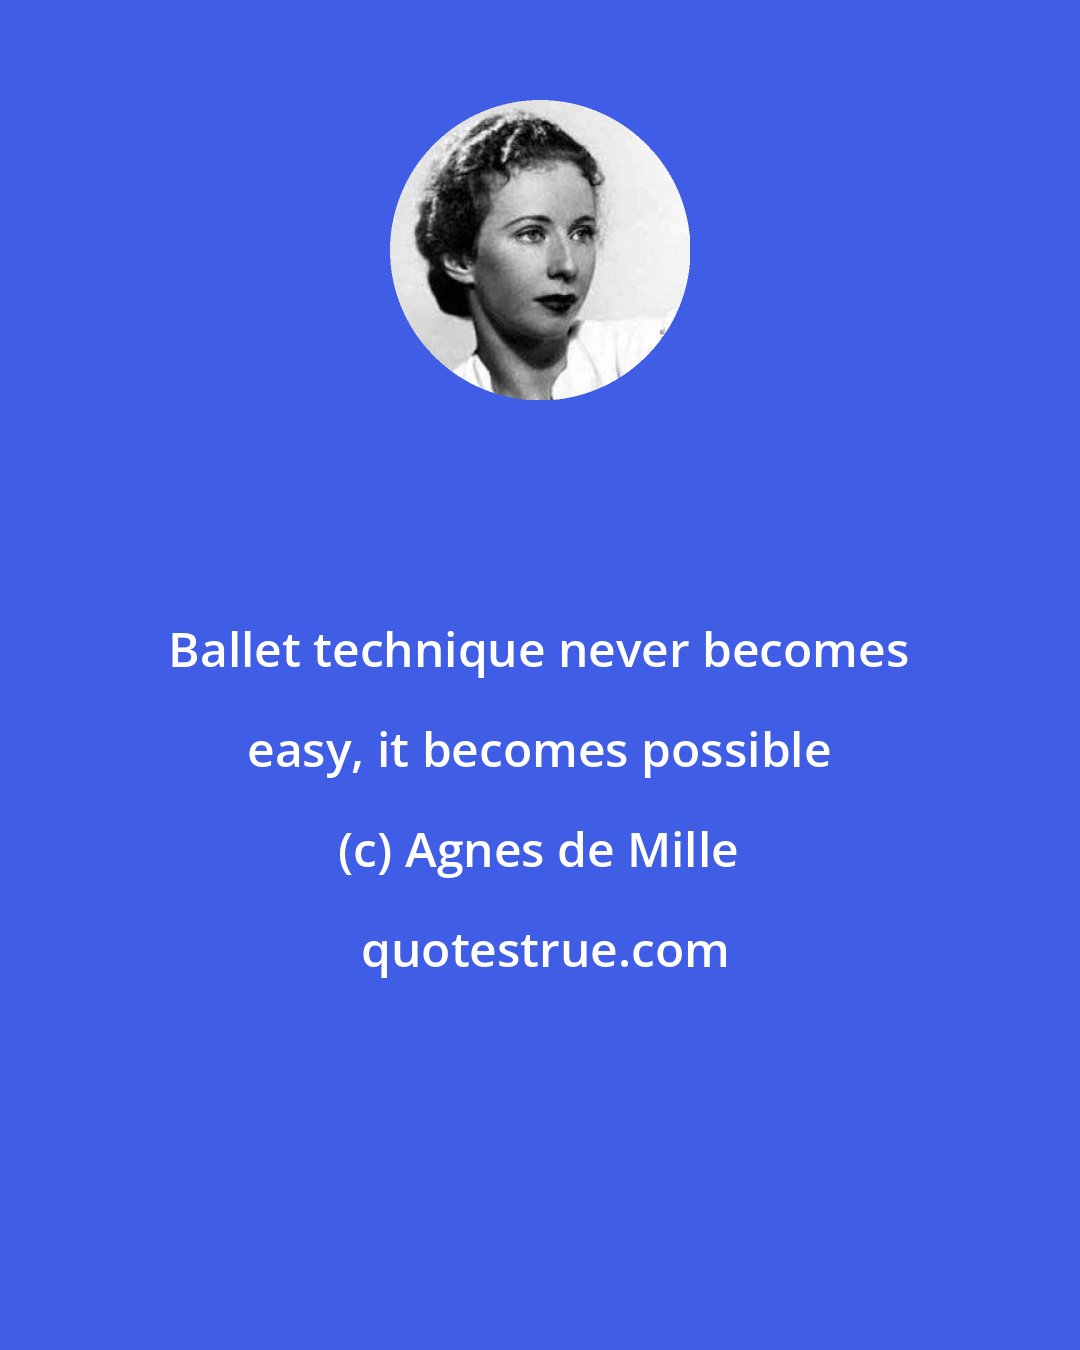 Agnes de Mille: Ballet technique never becomes easy, it becomes possible